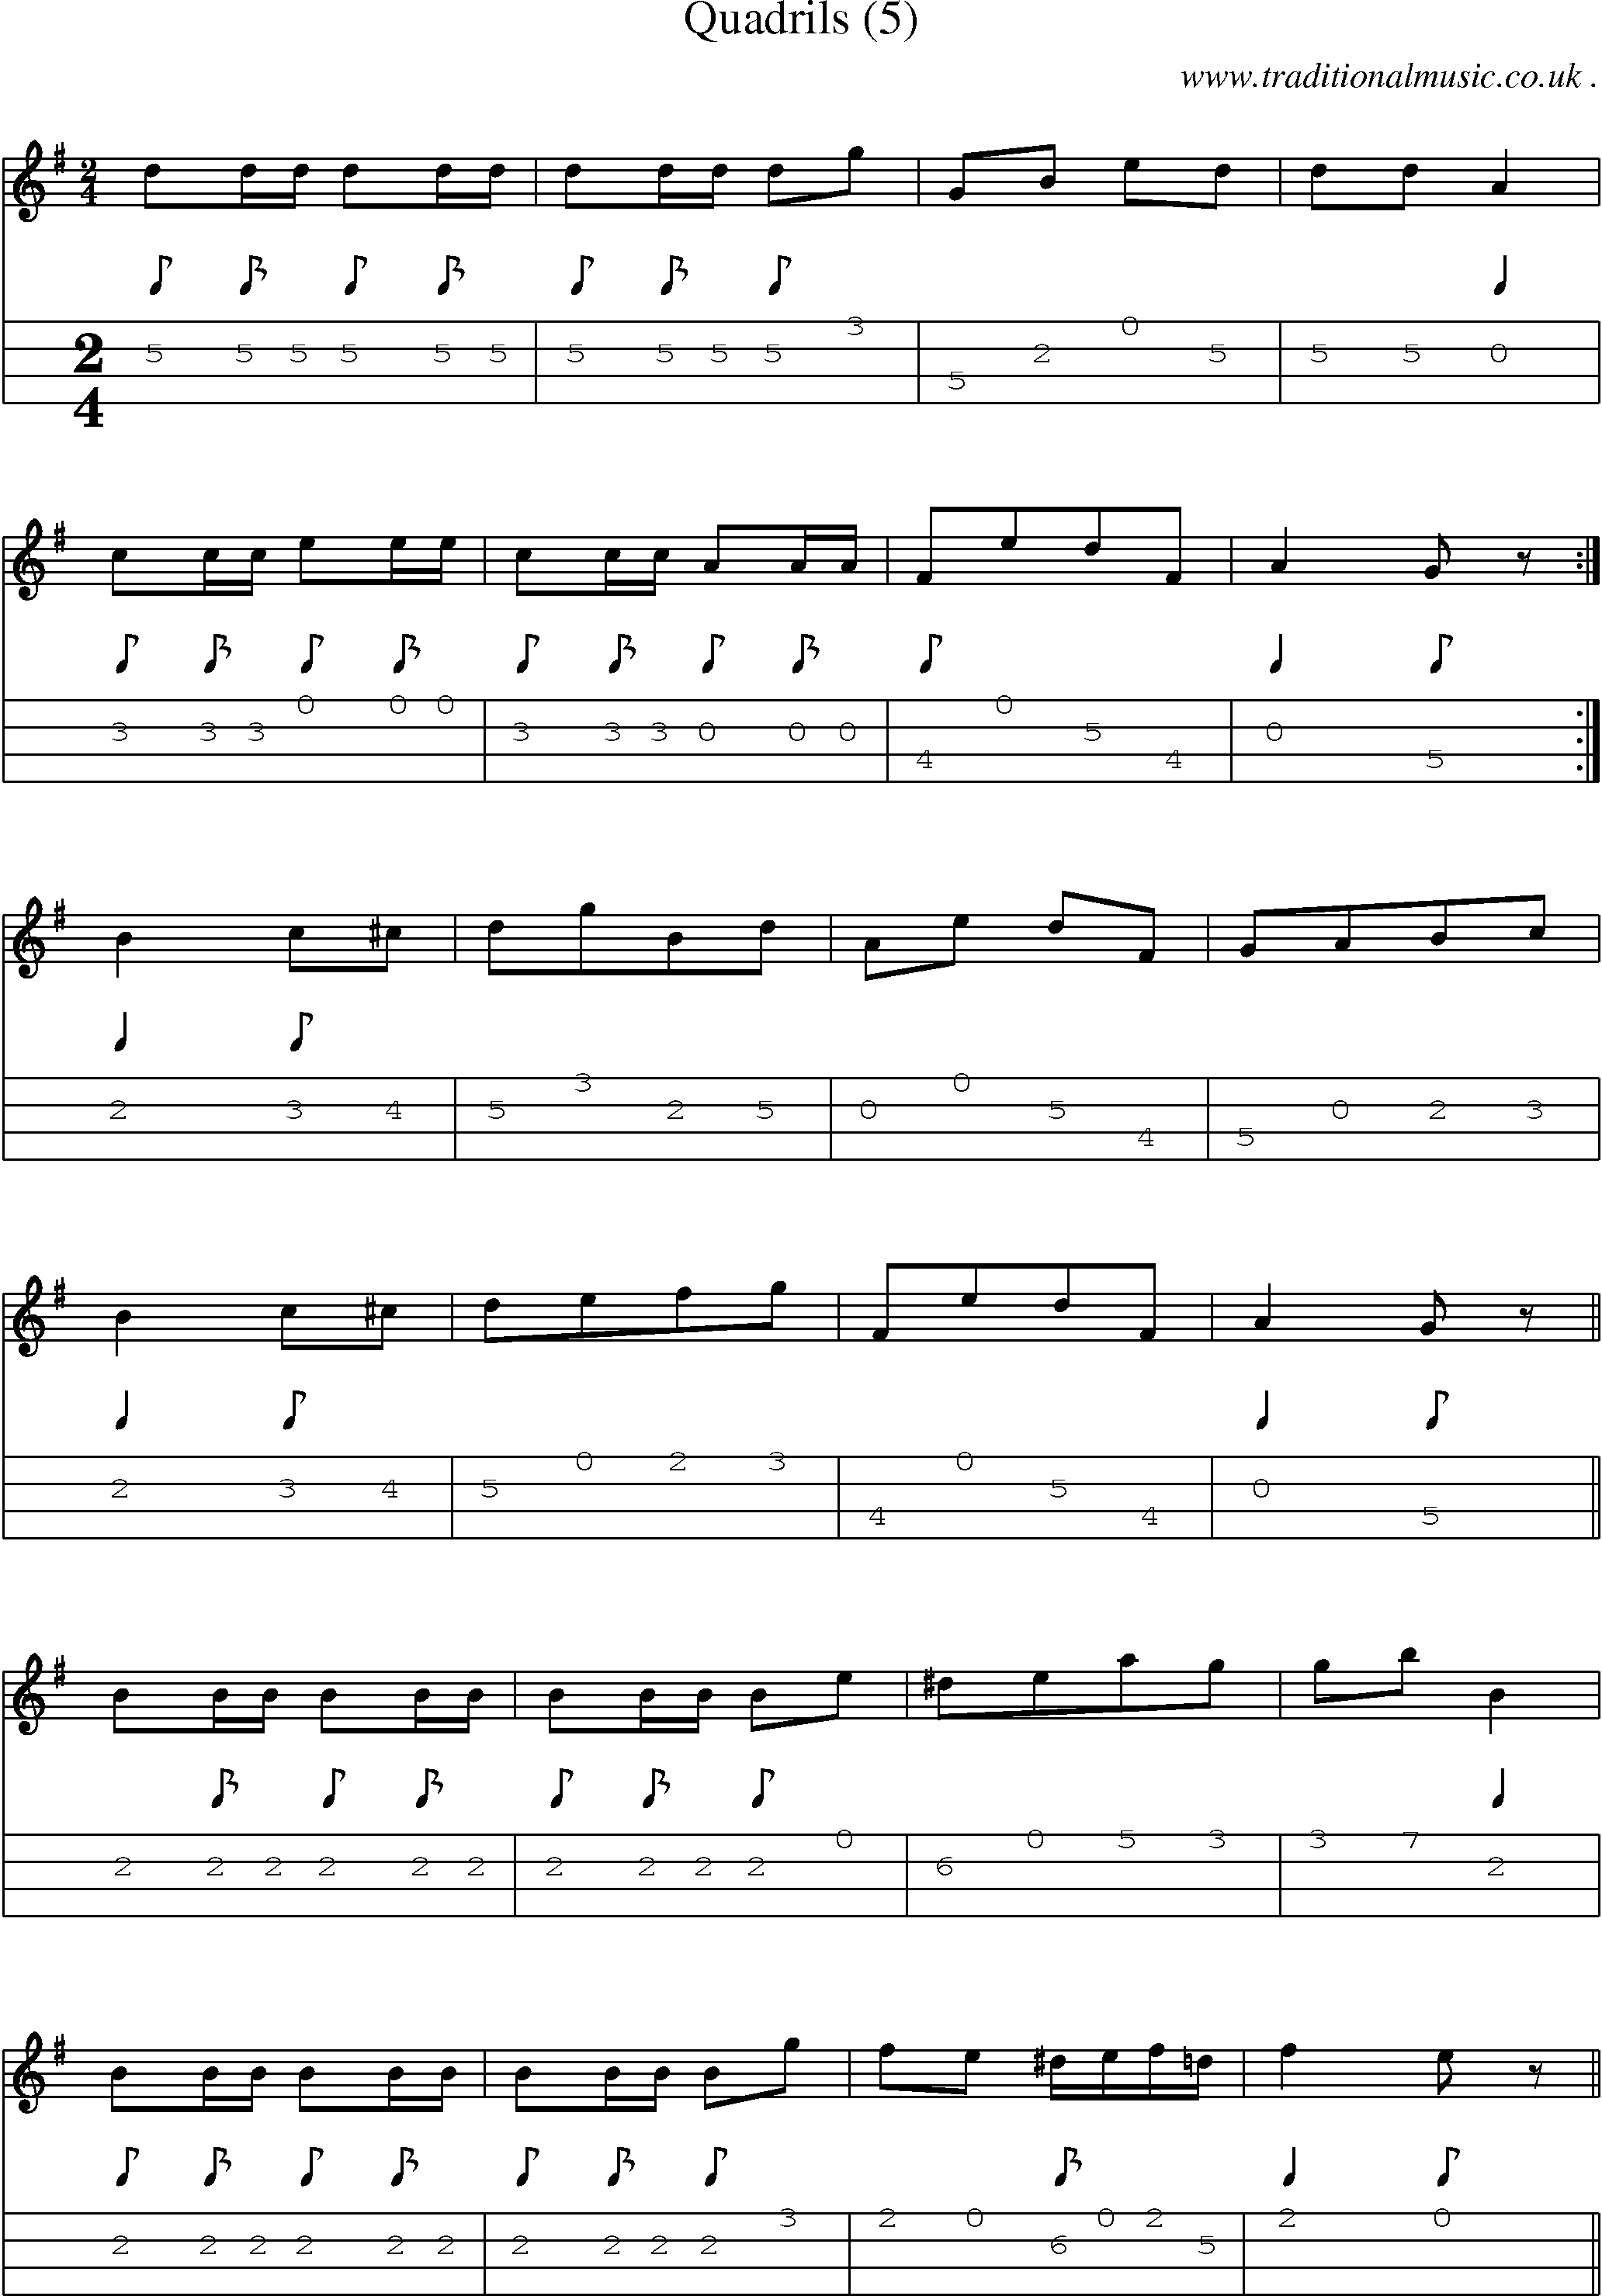 Sheet-Music and Mandolin Tabs for Quadrils (5)